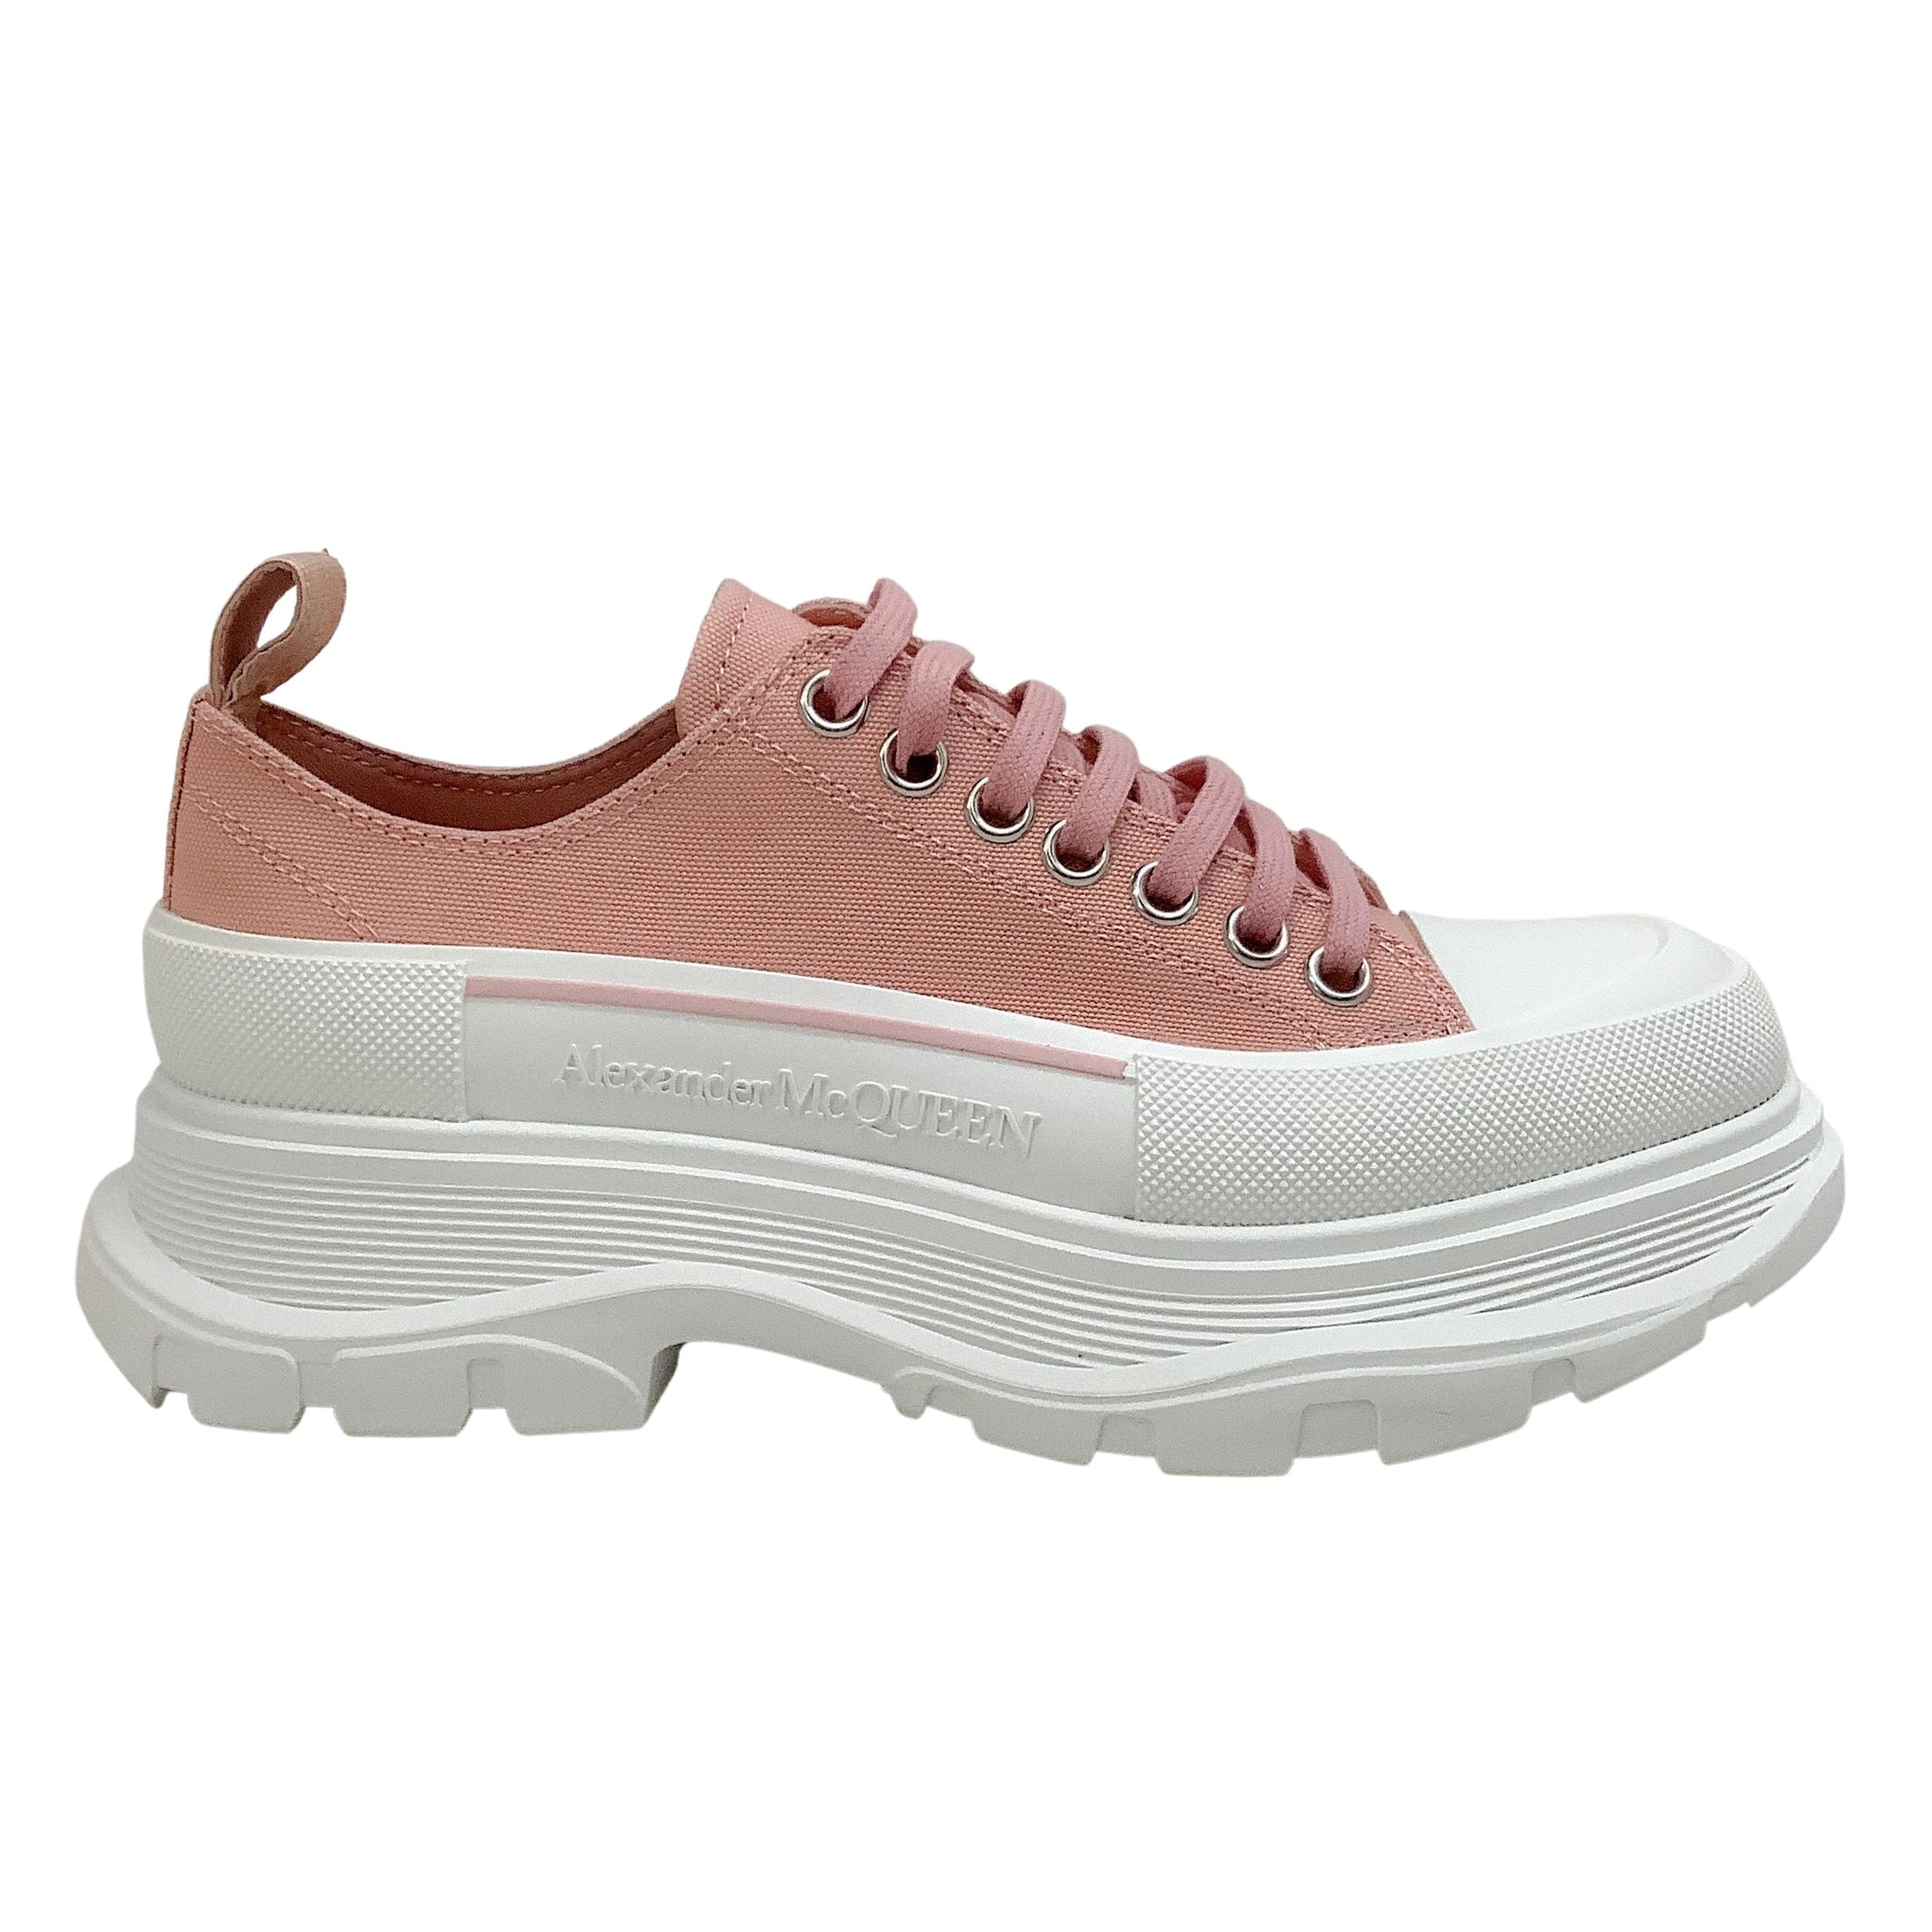 Alexander McQueen Pink / White Canvas Platform Sneakers